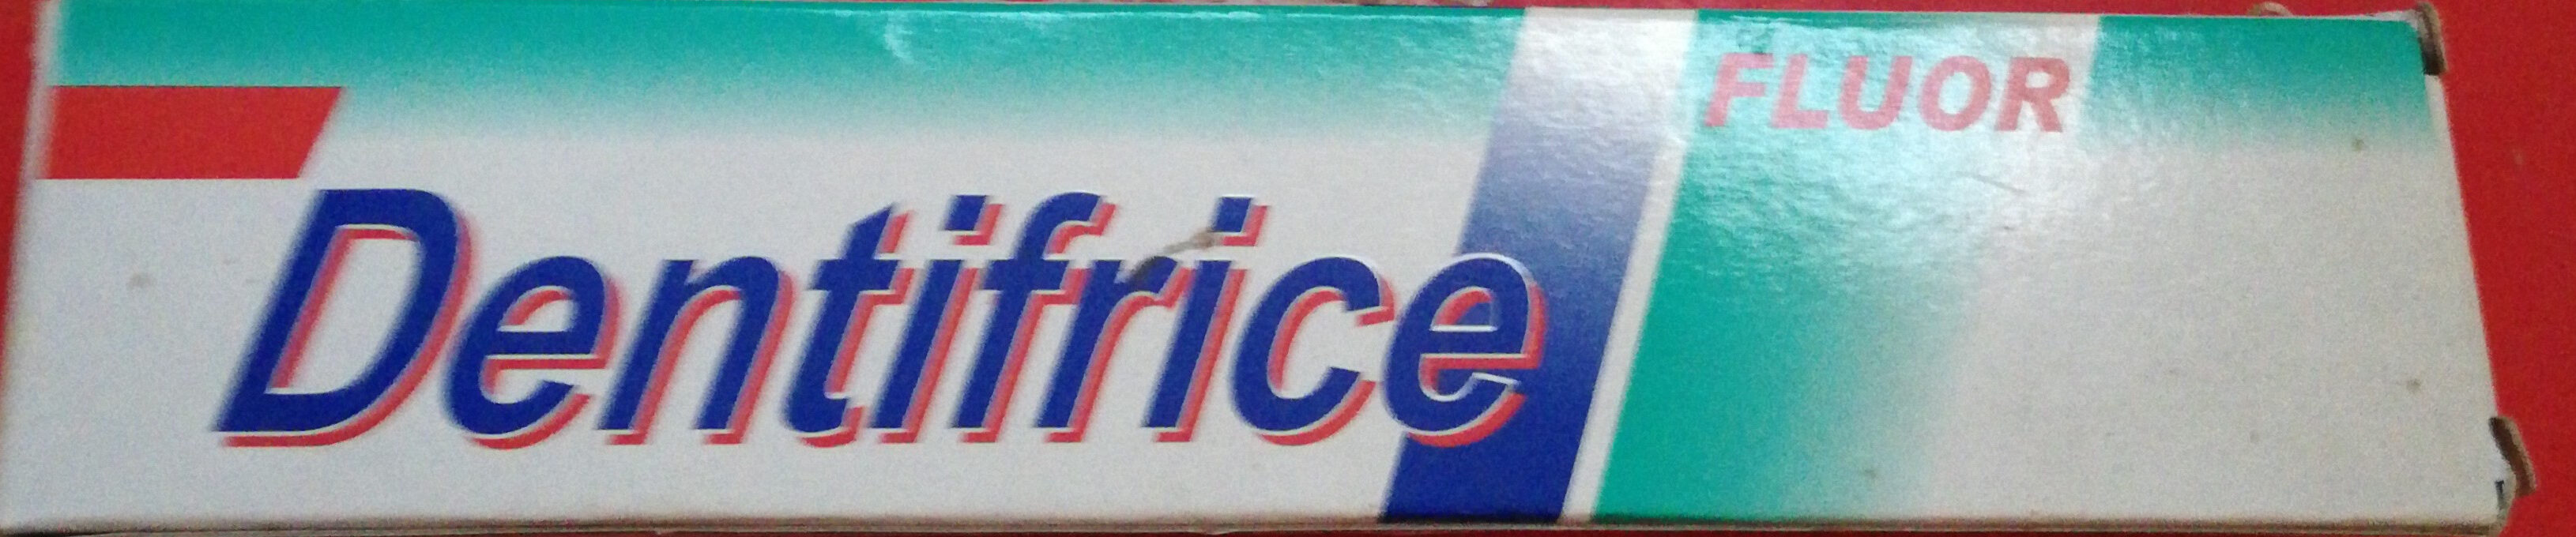 Dentifrice - 製品 - fr